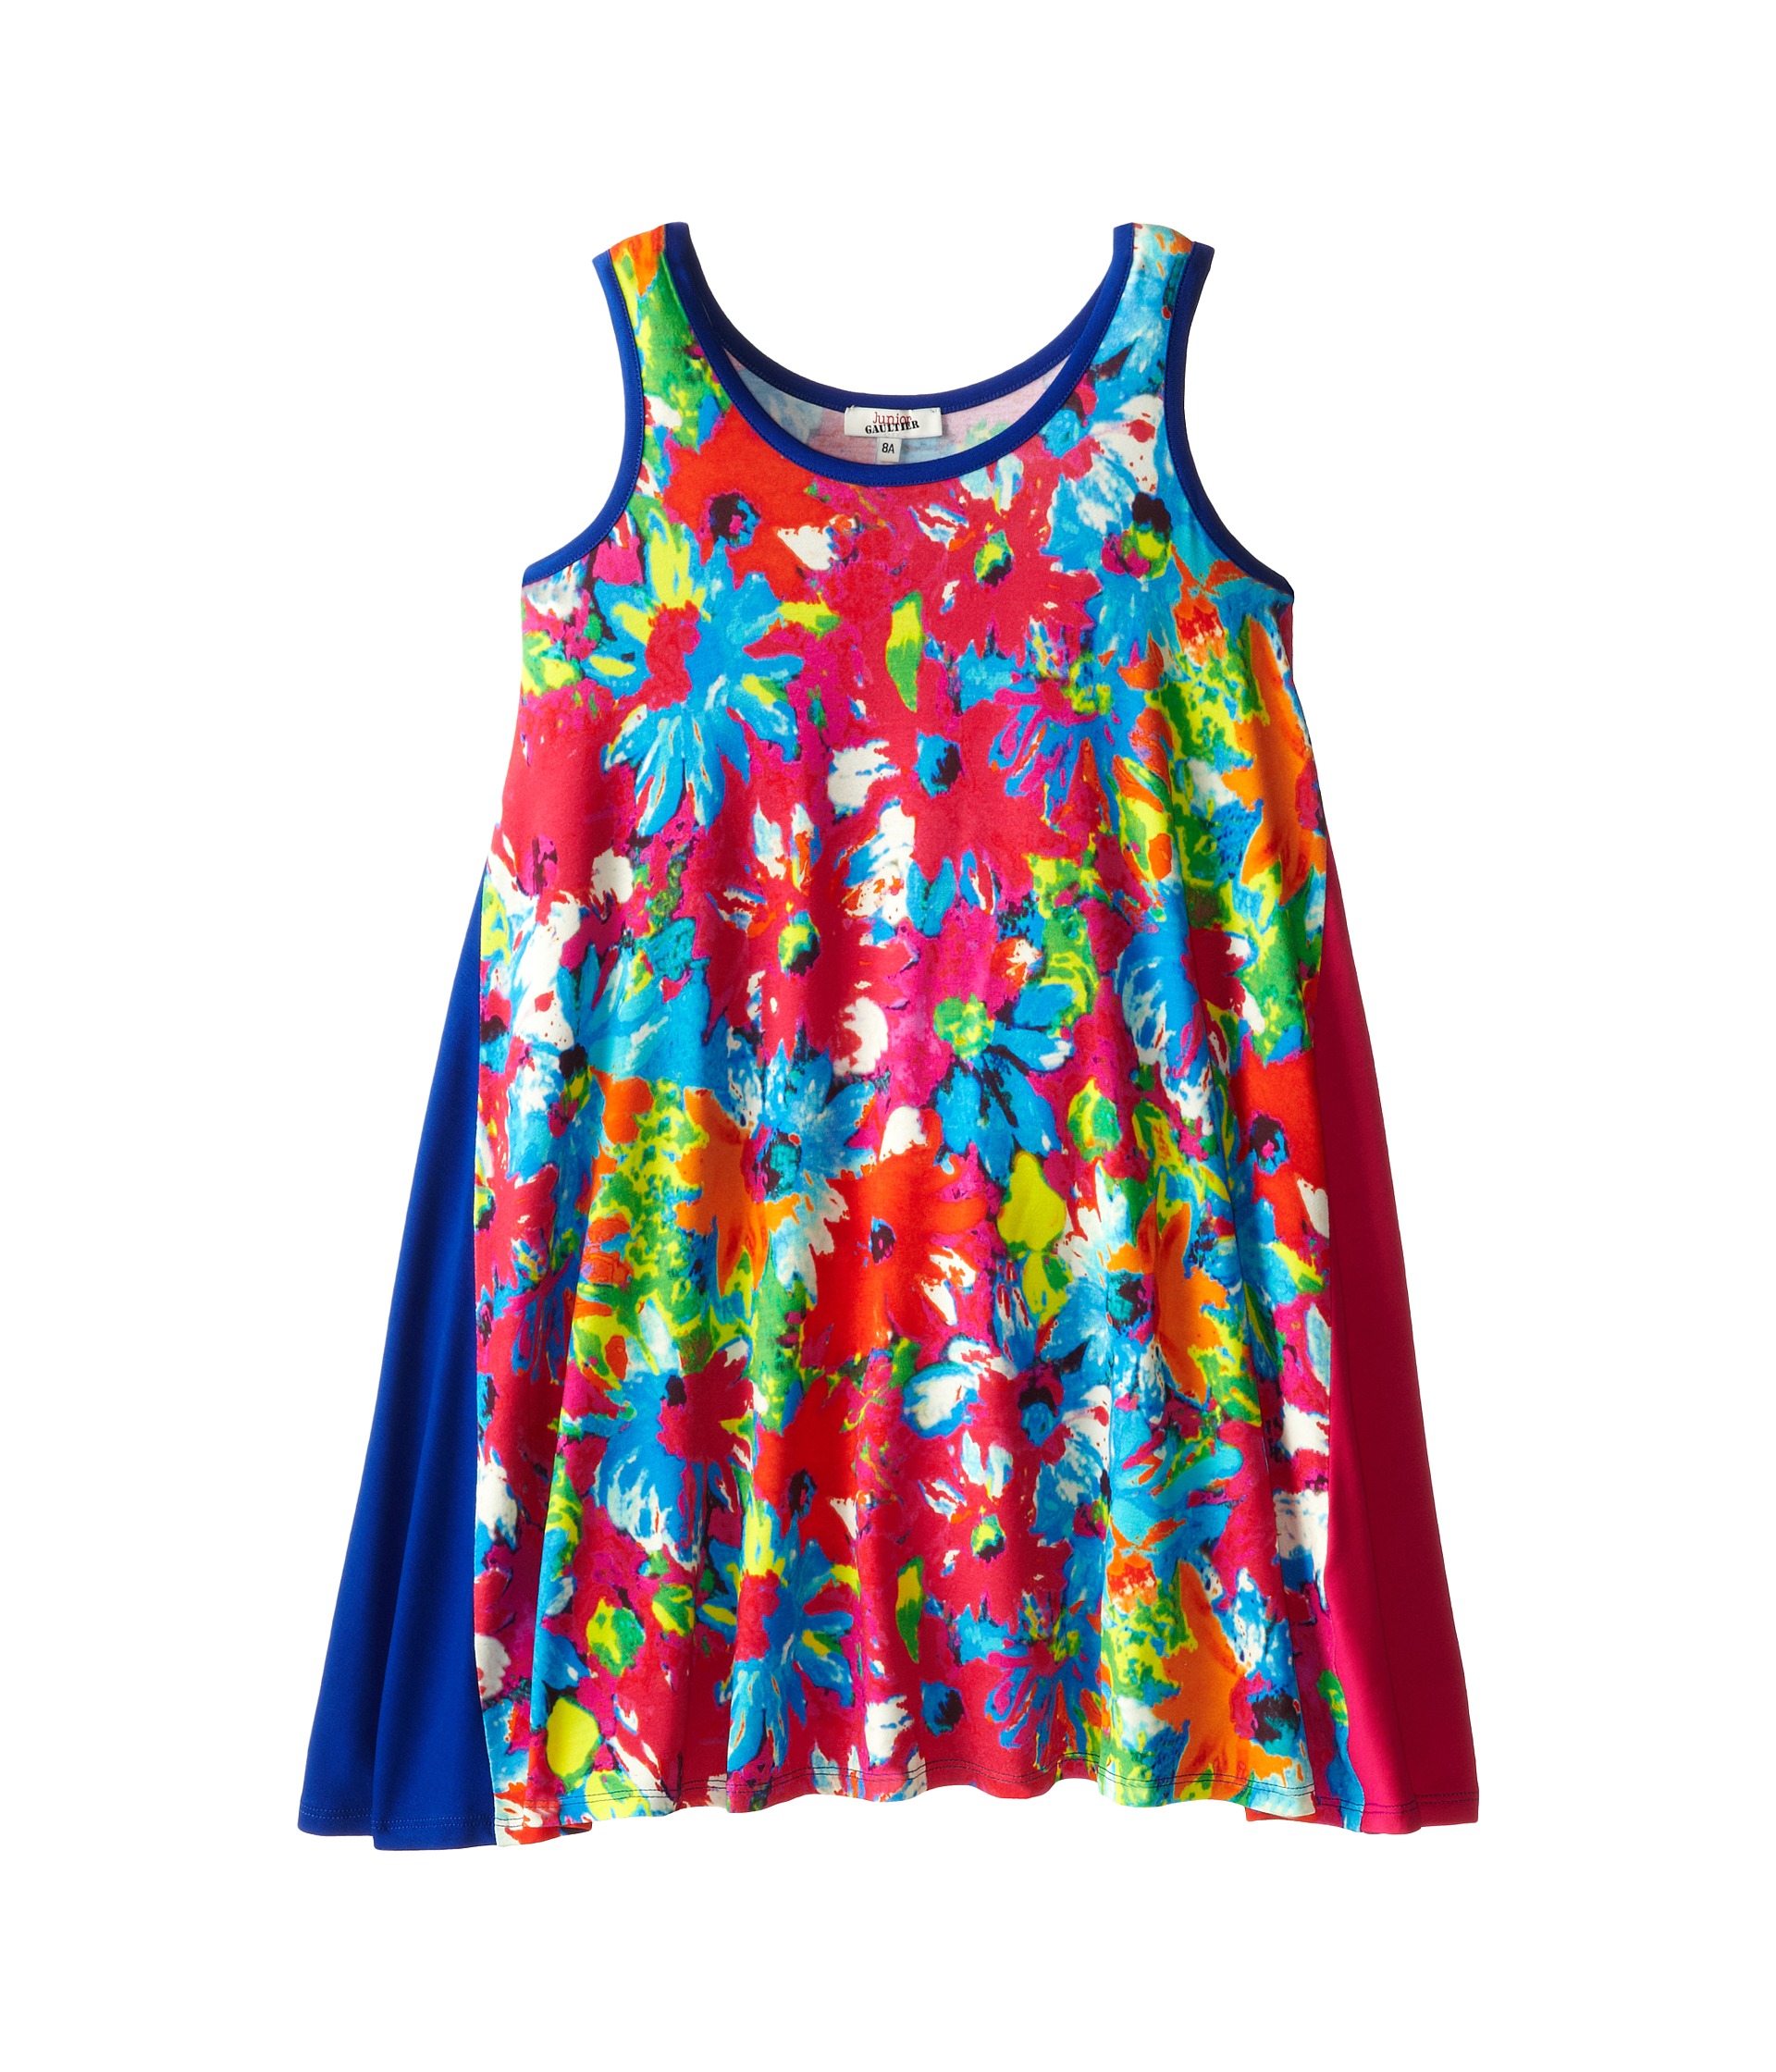 Junior Gaultier Floral Print Dress (Big Kid) Indigo